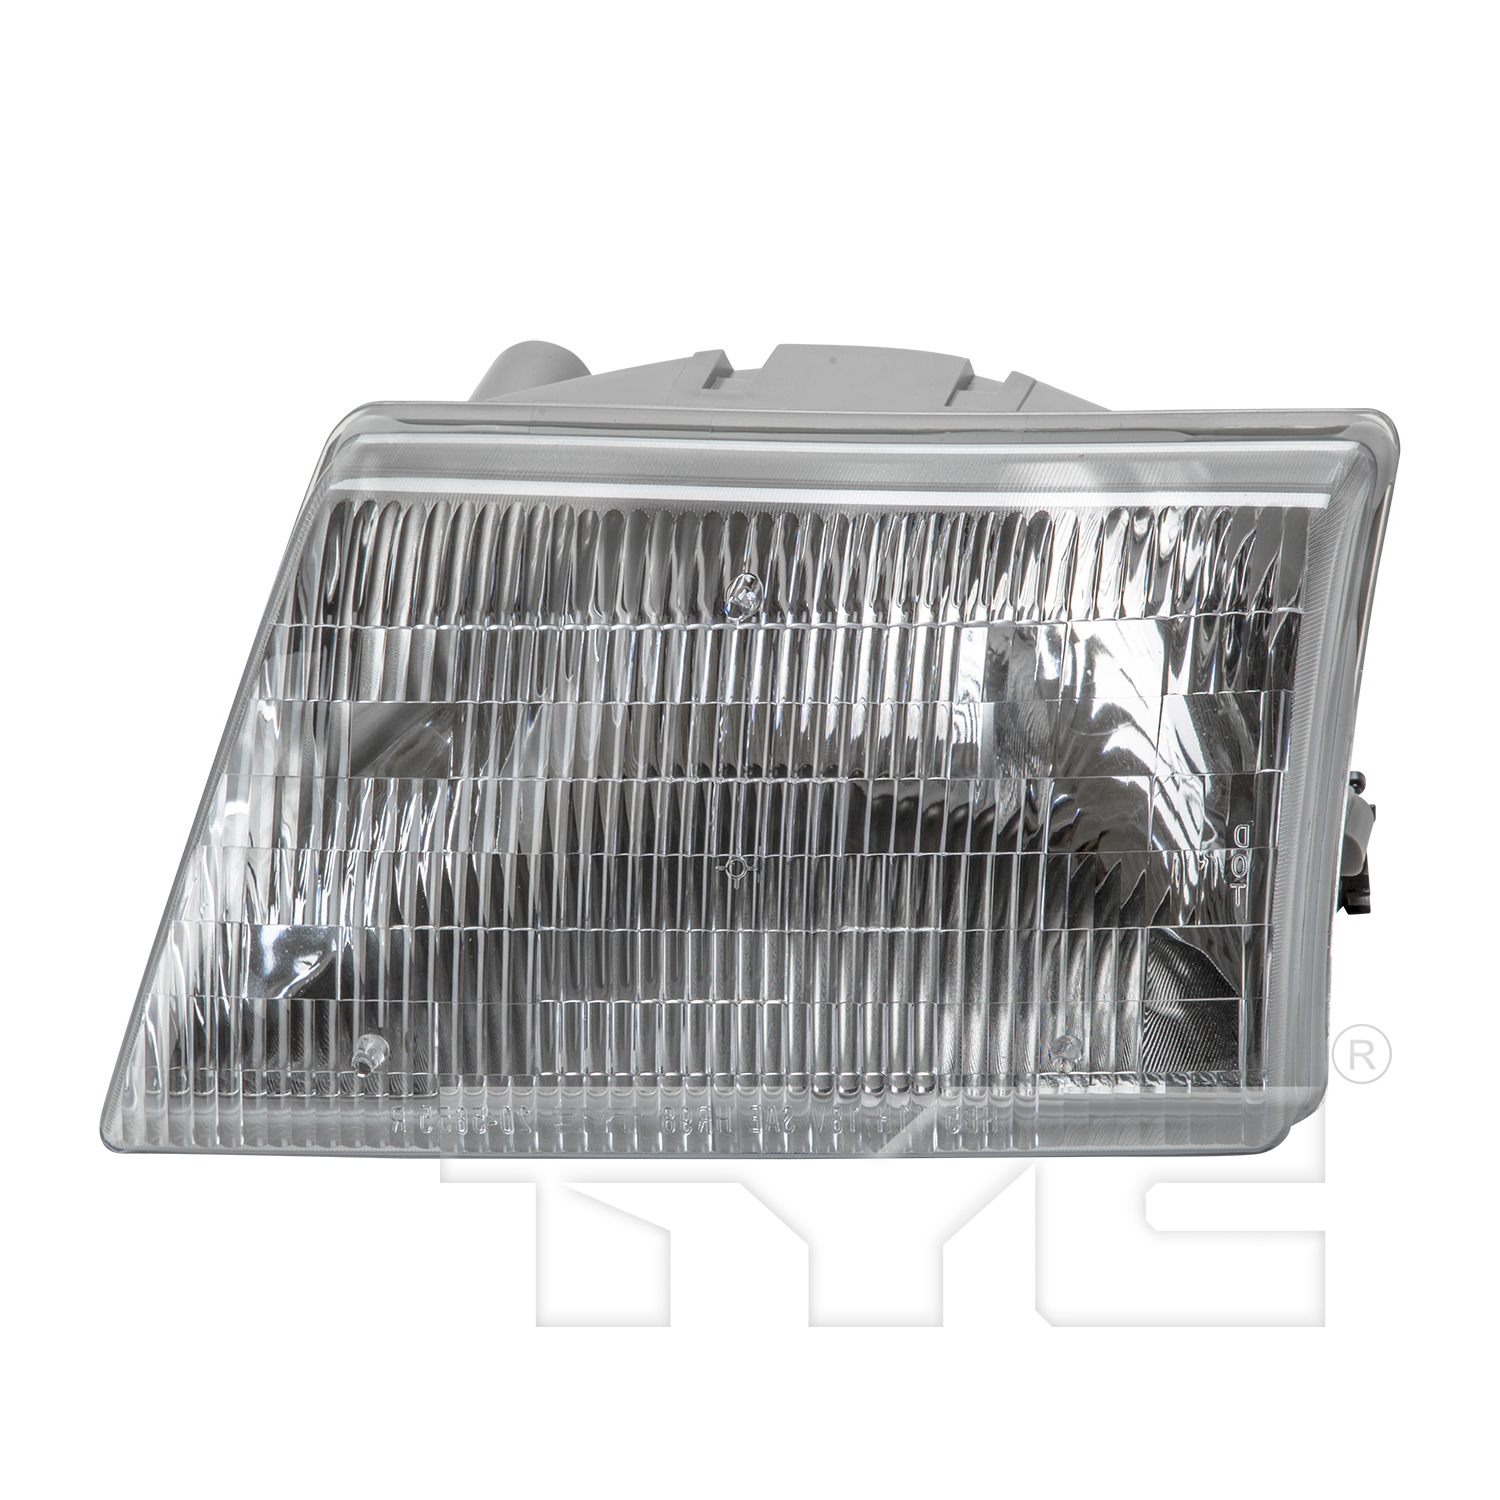 Aftermarket HEADLIGHTS for MAZDA - B3000, B3000,98-00,LT Headlamp assy composite